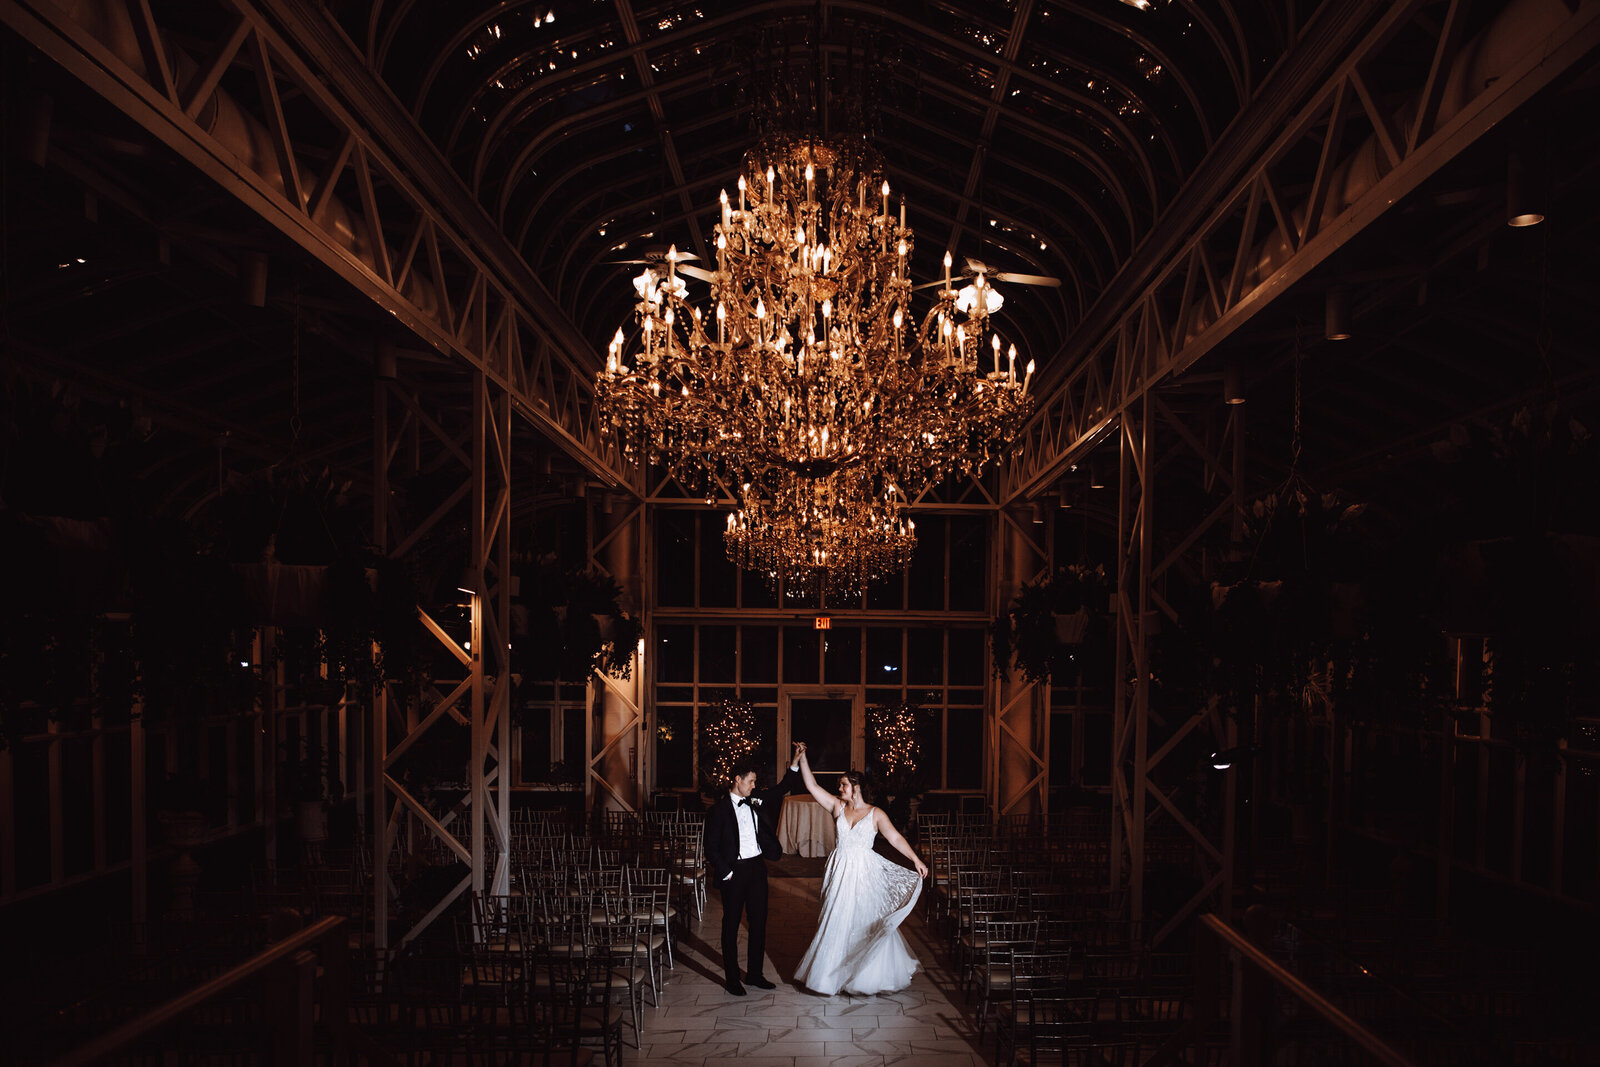 A sample image from Philadelphia wedding photographer Daring Romantics. A couple dances together at a beautiful wedding venue.